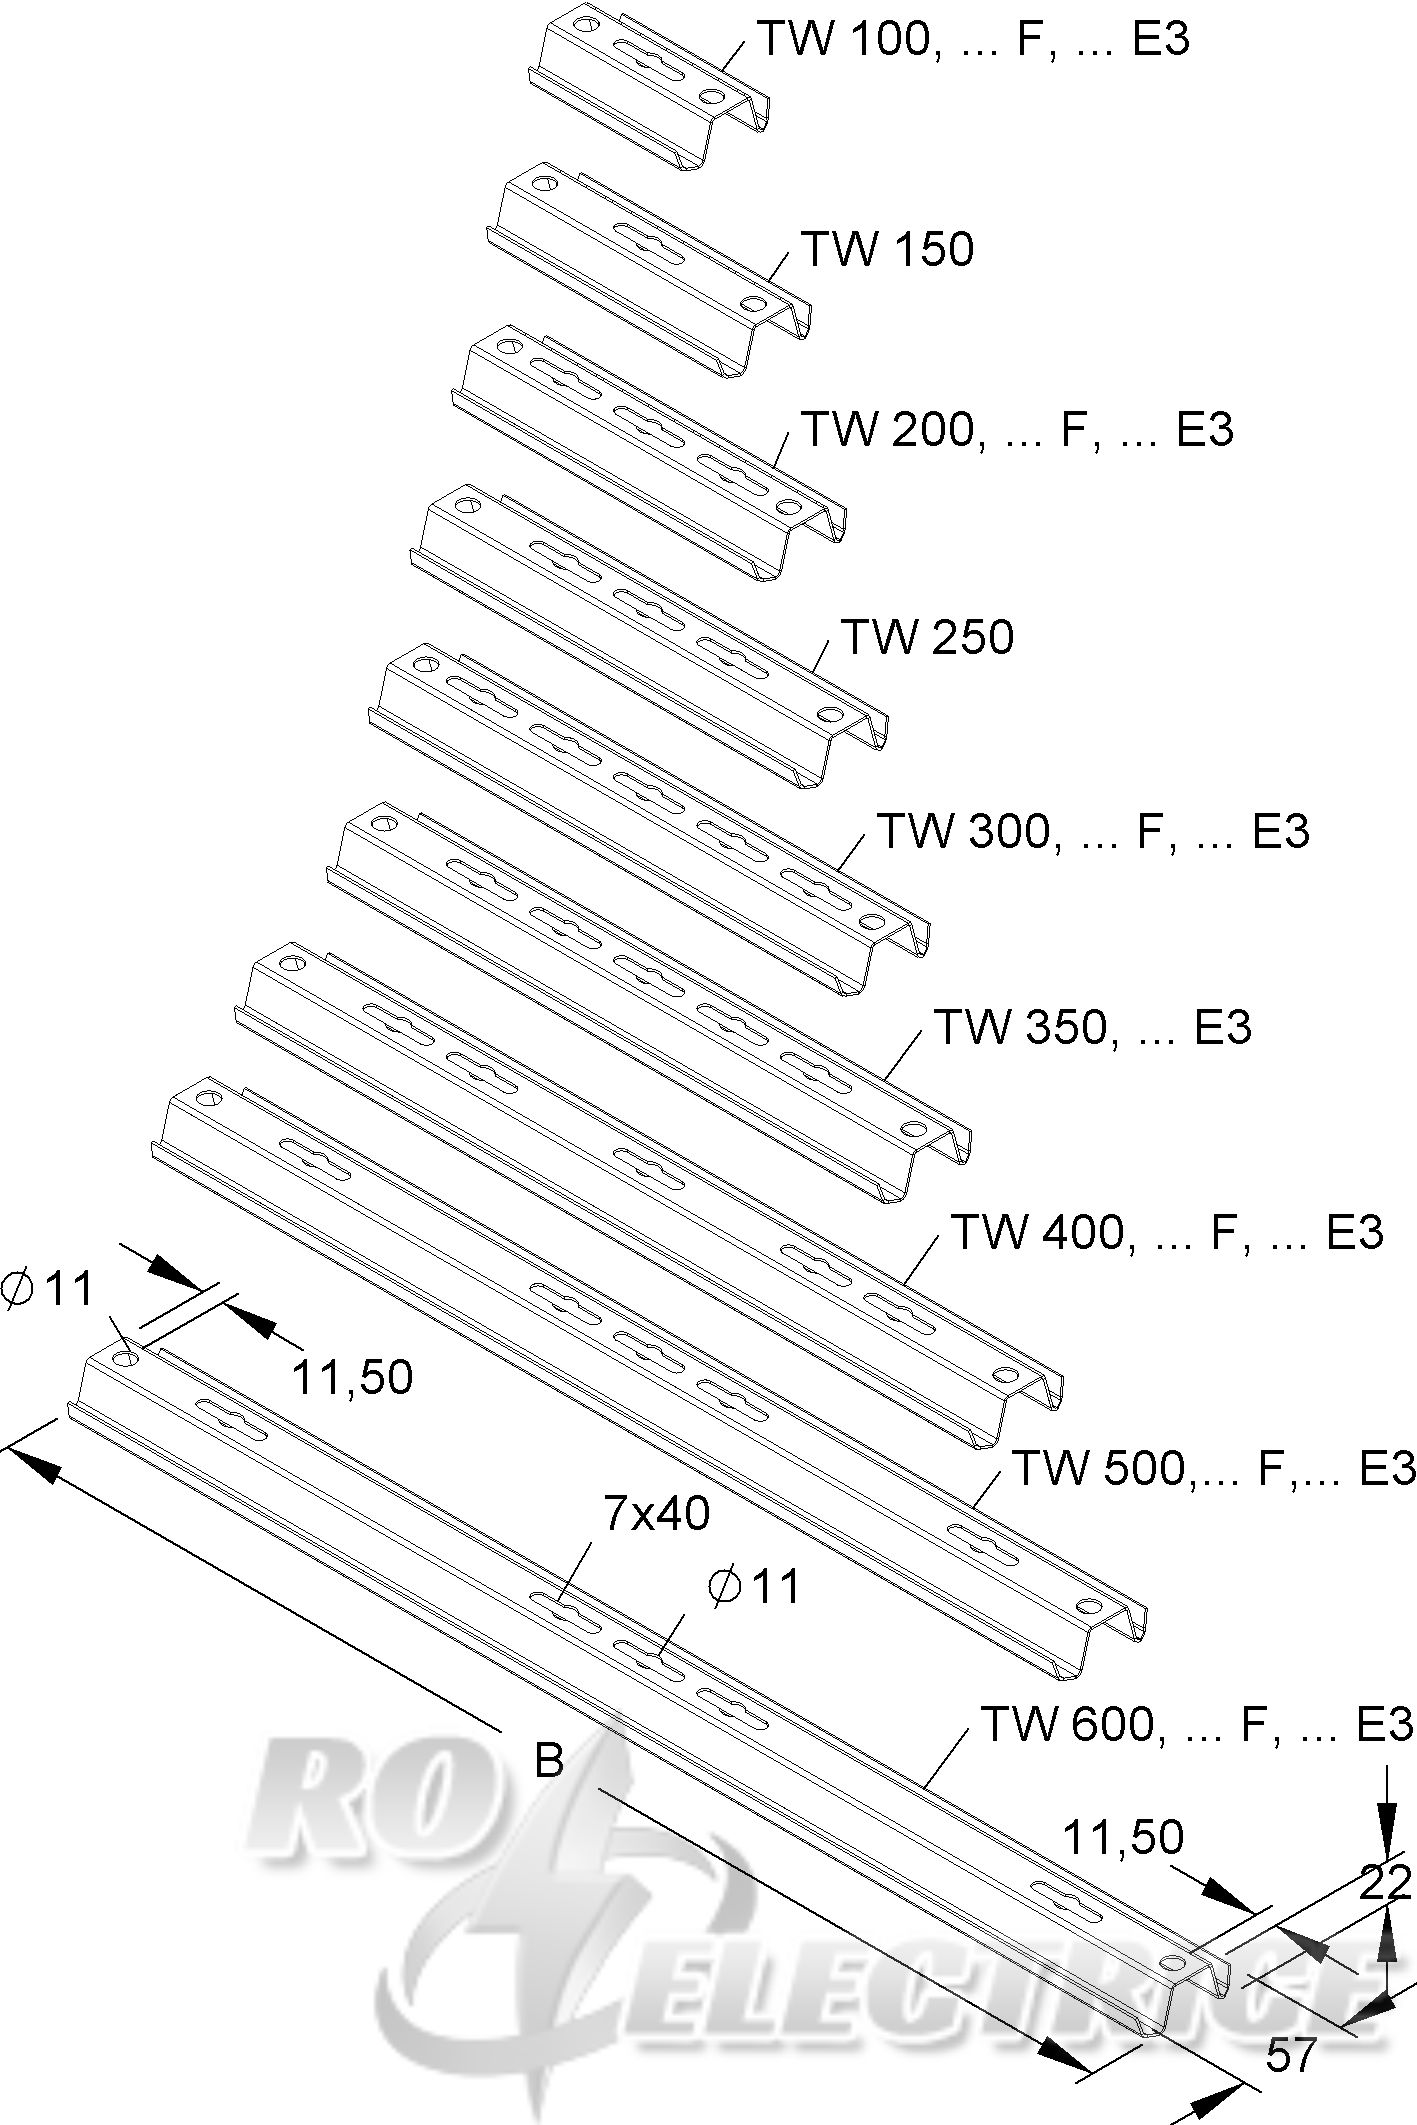 Tragwinkel, Breite 98 mm, Stahl, feuerverzinkt DIN EN ISO 1461, inkl. Zubehör